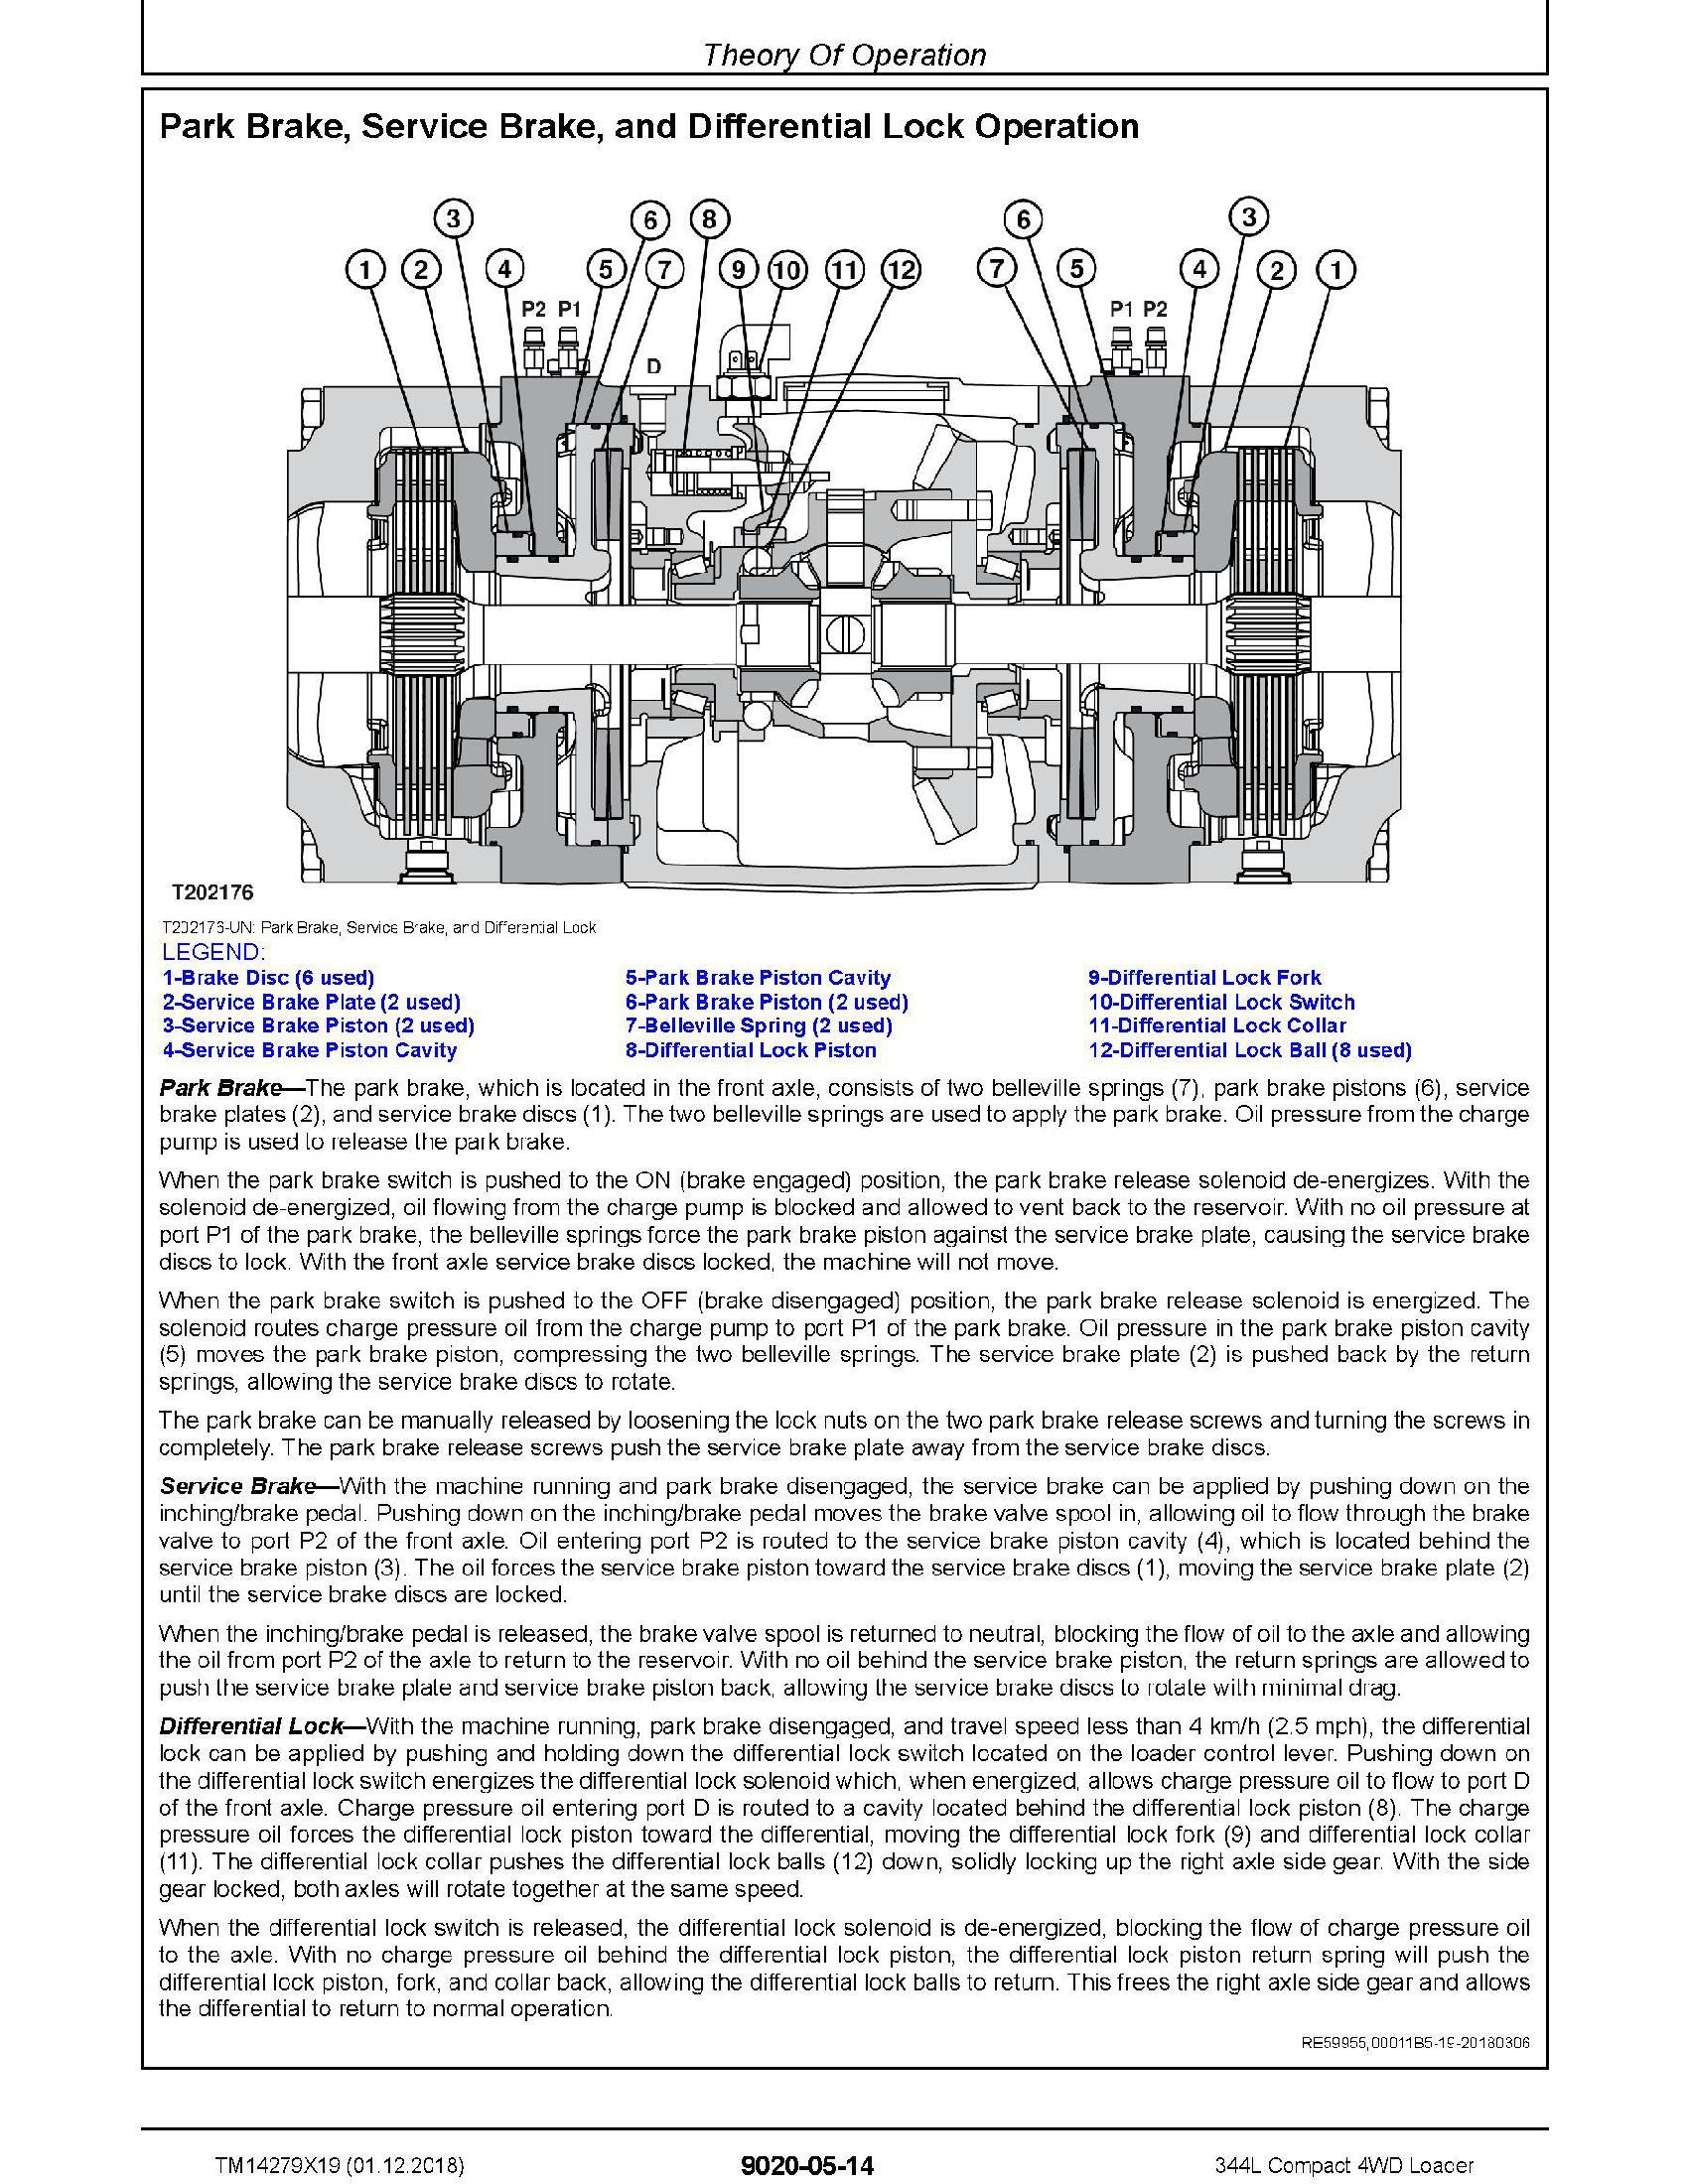 John Deere 862B-II manual pdf